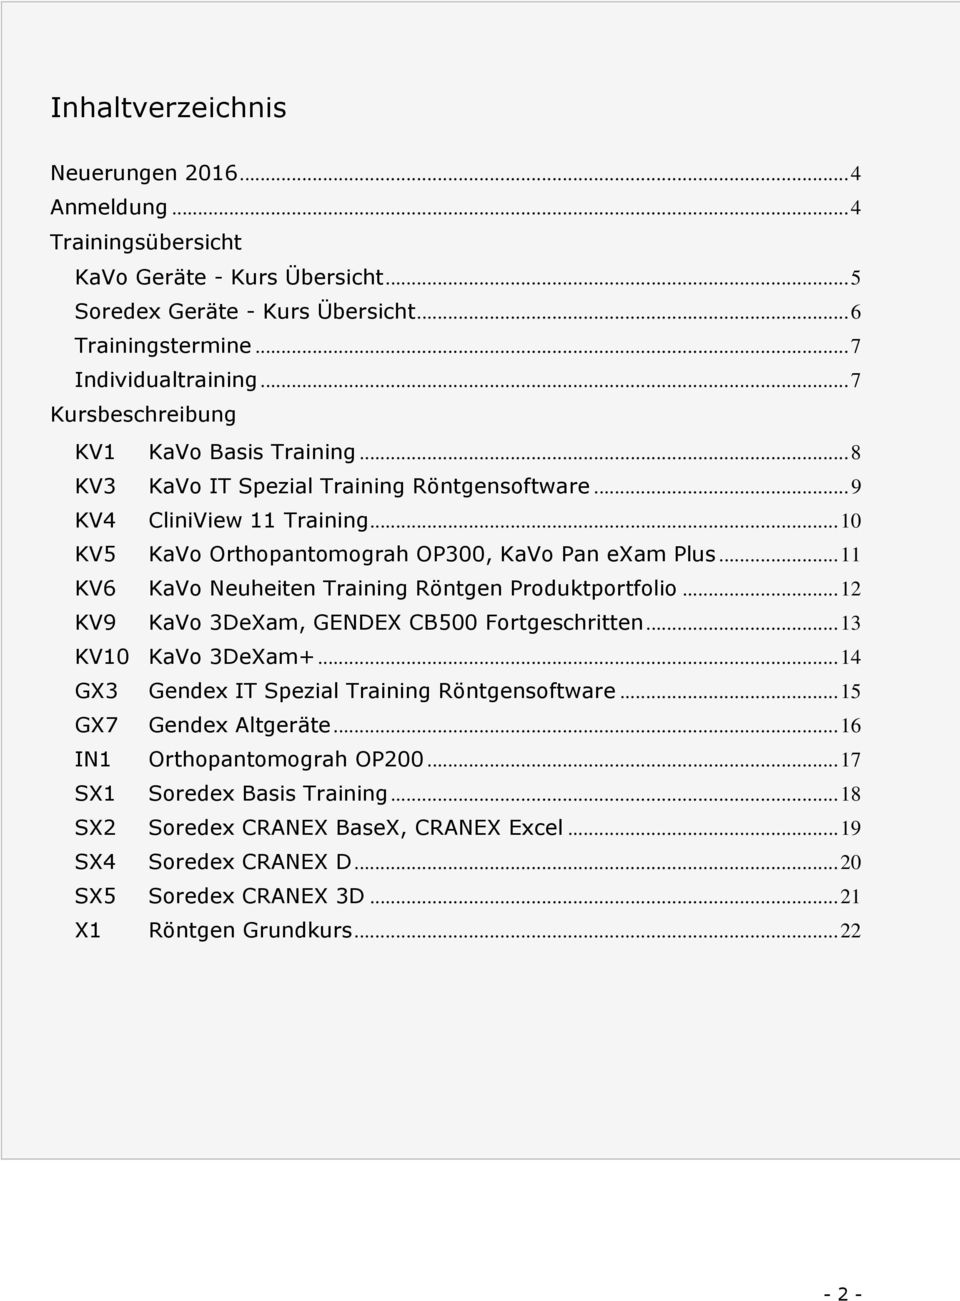 .. 11 KV6 KaVo Neuheiten Training Röntgen Produktportfolio... 12 KV9 KaVo 3DeXam, GENDEX CB500 Fortgeschritten... 13 KV10 KaVo 3DeXam+... 14 GX3 Gendex IT Spezial Training Röntgensoftware.